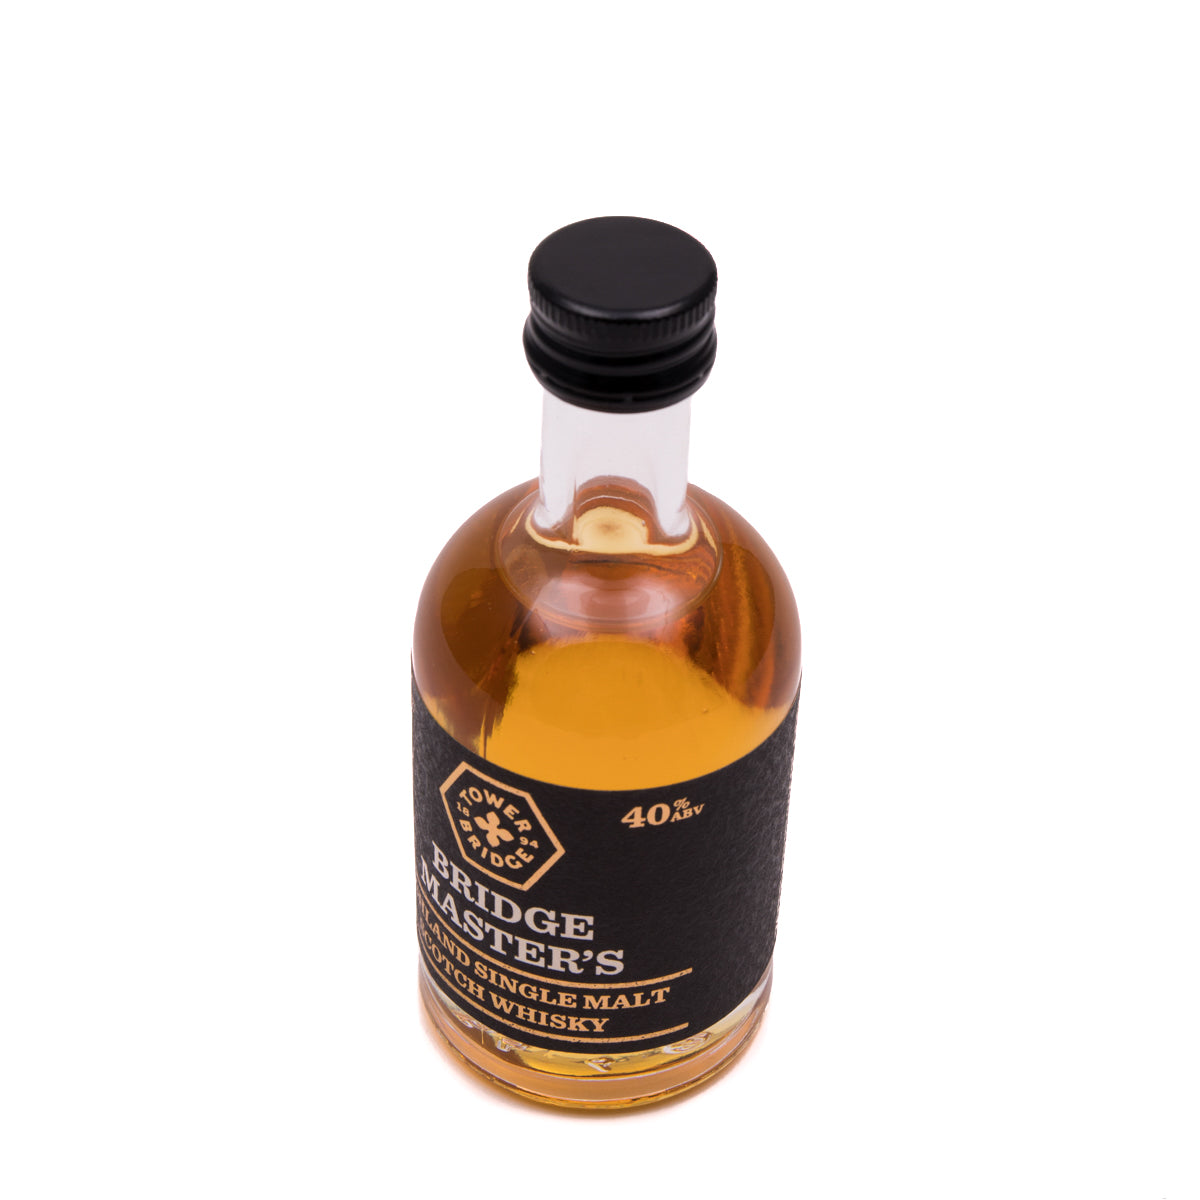 Bridge Master's Highland Single Malt Scotch Whisky 5cl - 3